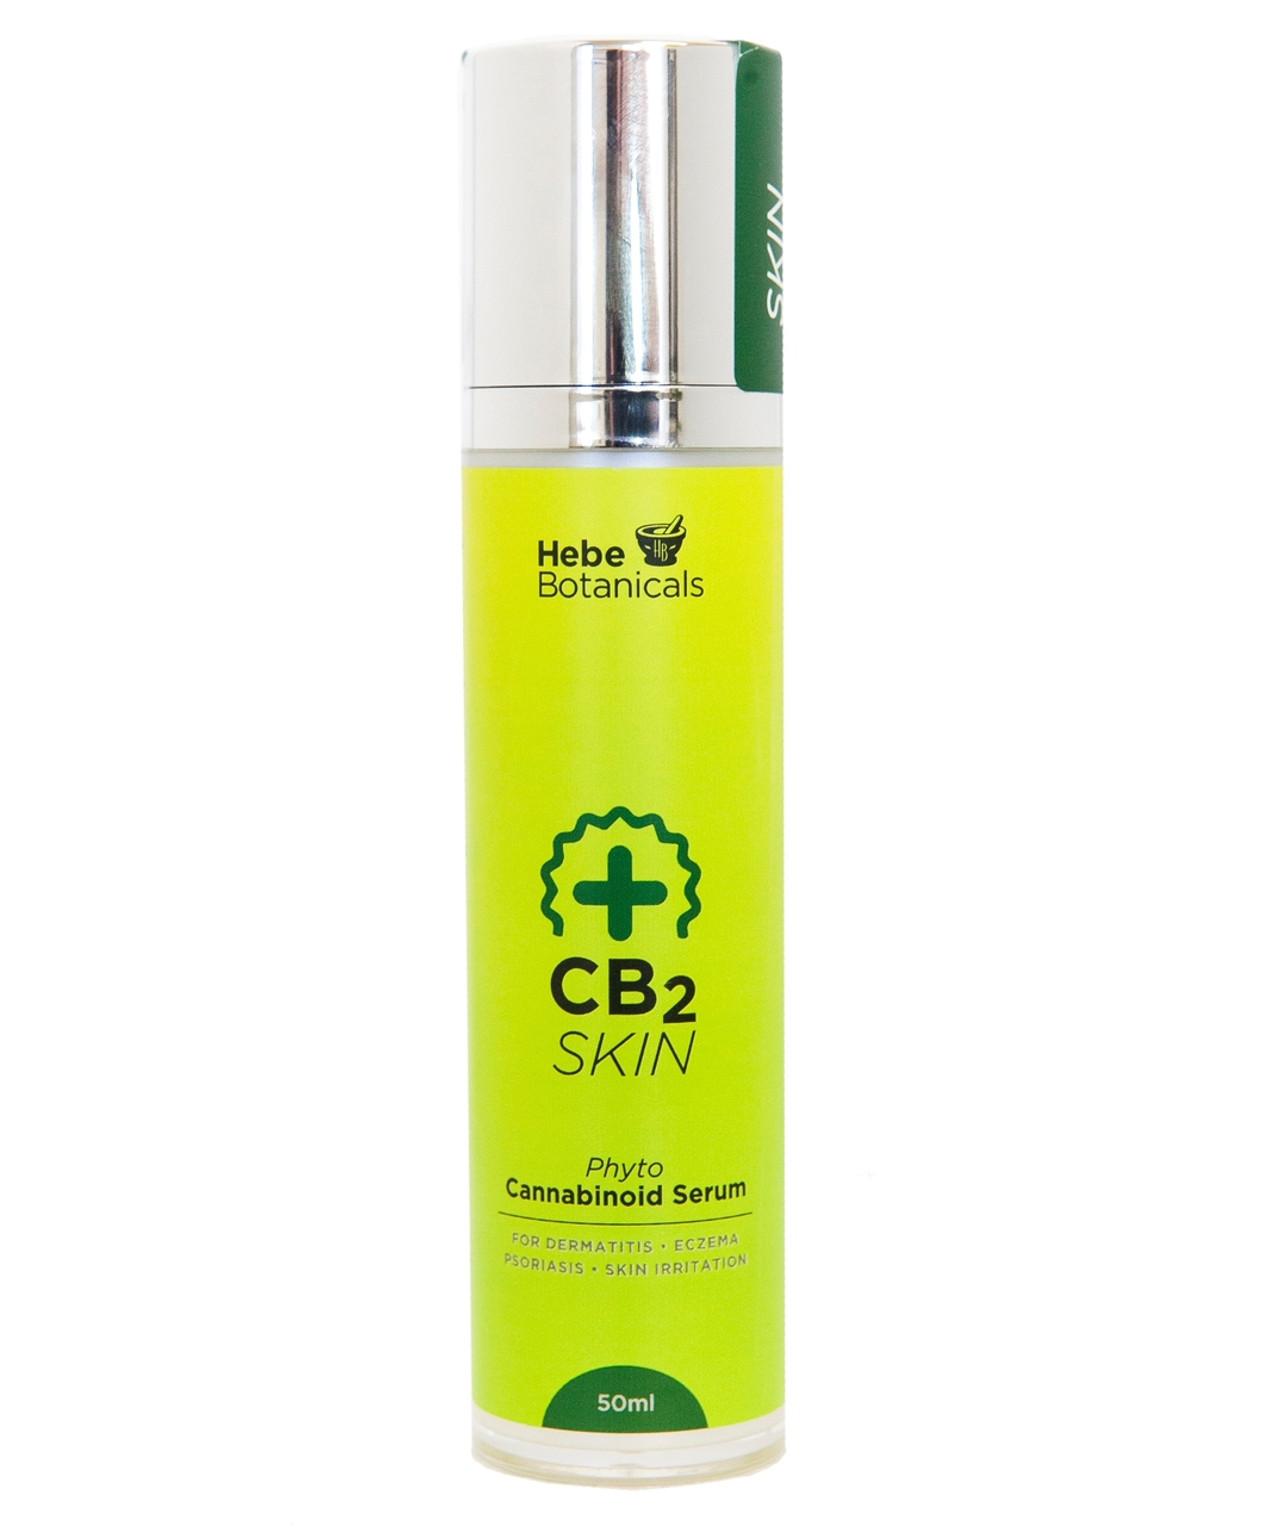 CB2 Skin (for eczema, irritation) - Hebe Botanicals